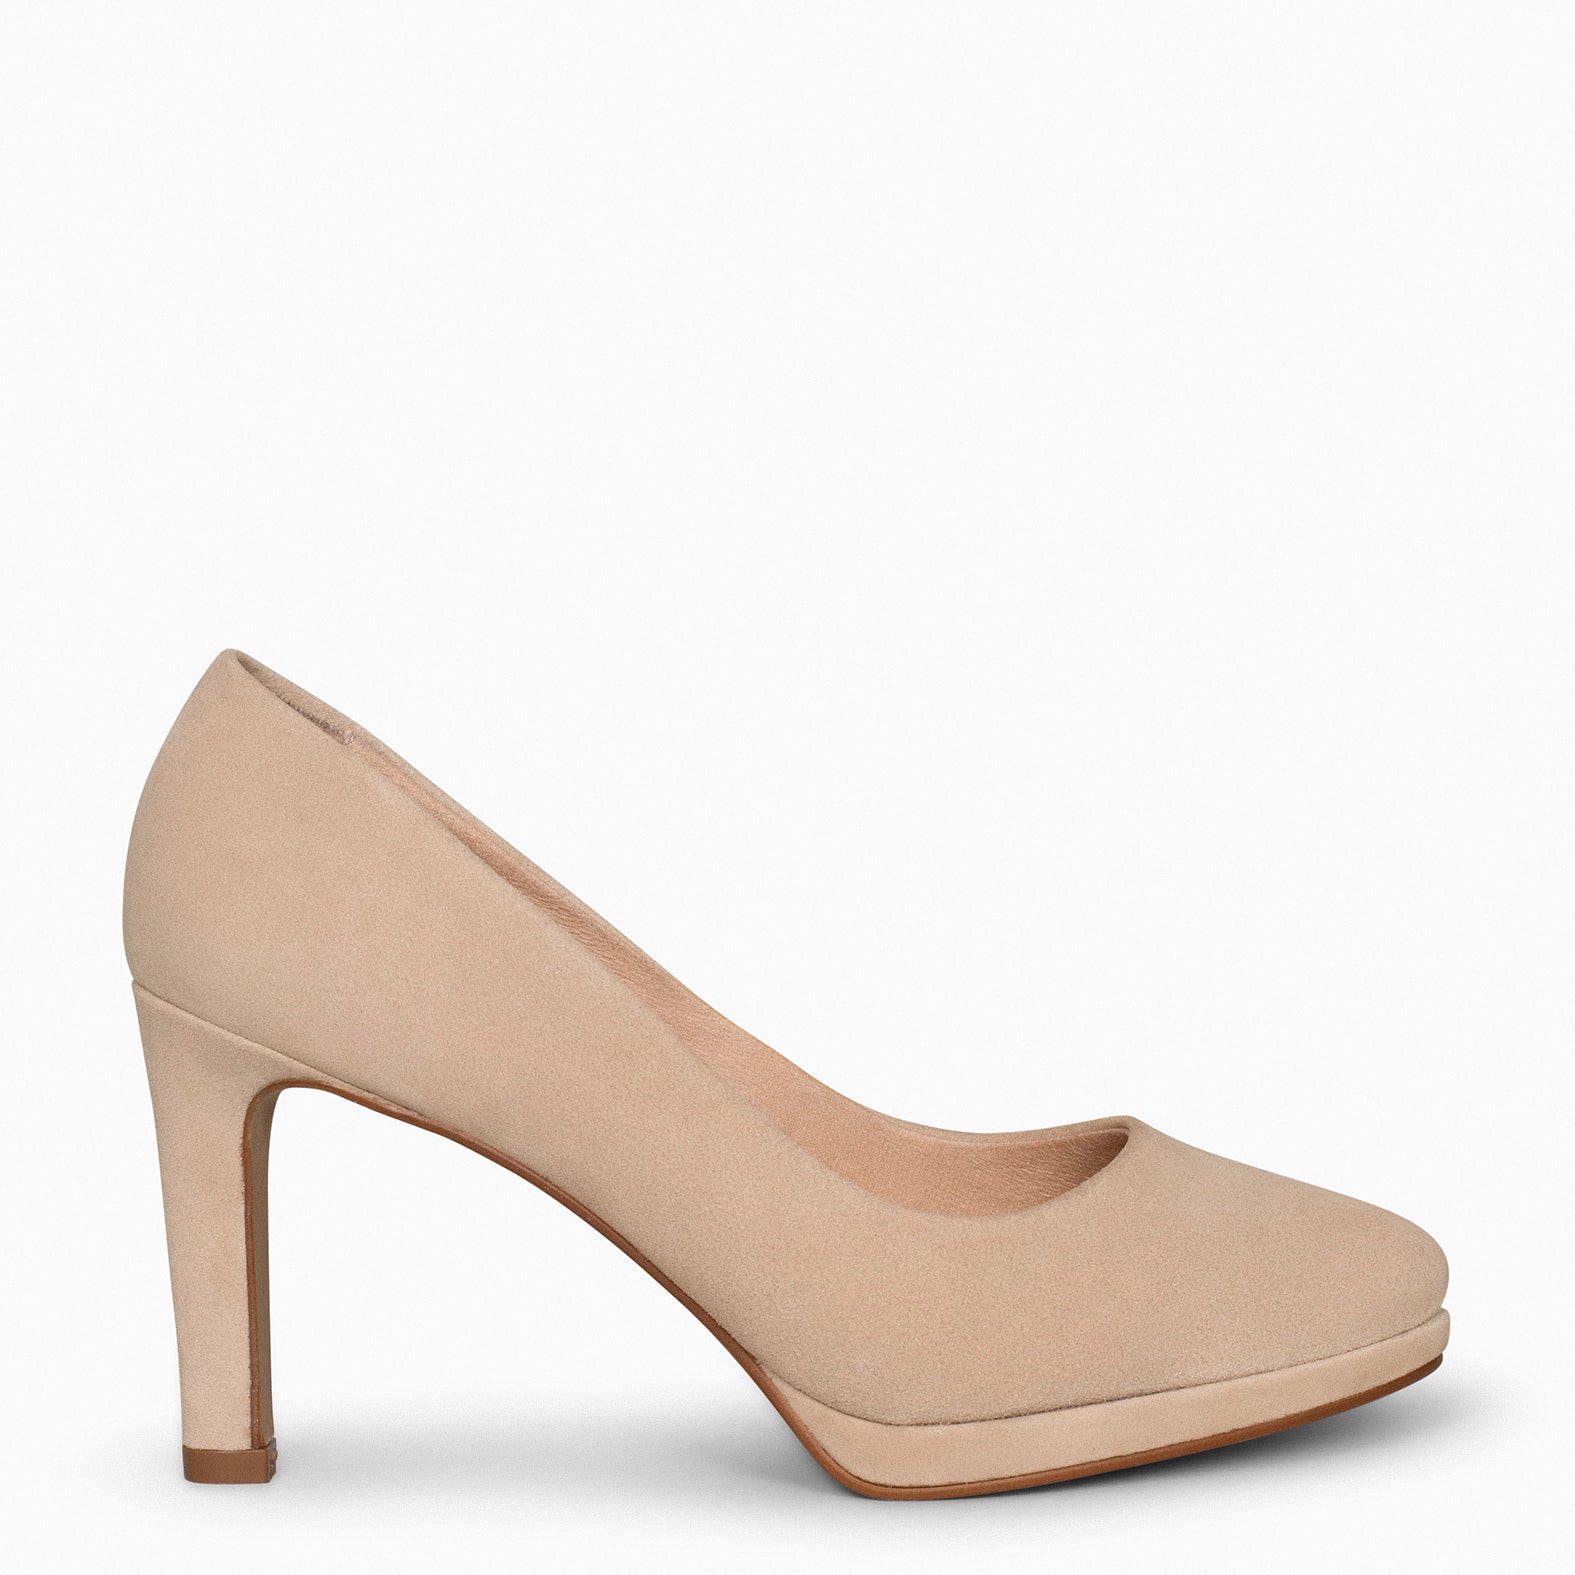 PLATFORM – SAND high heels with platform